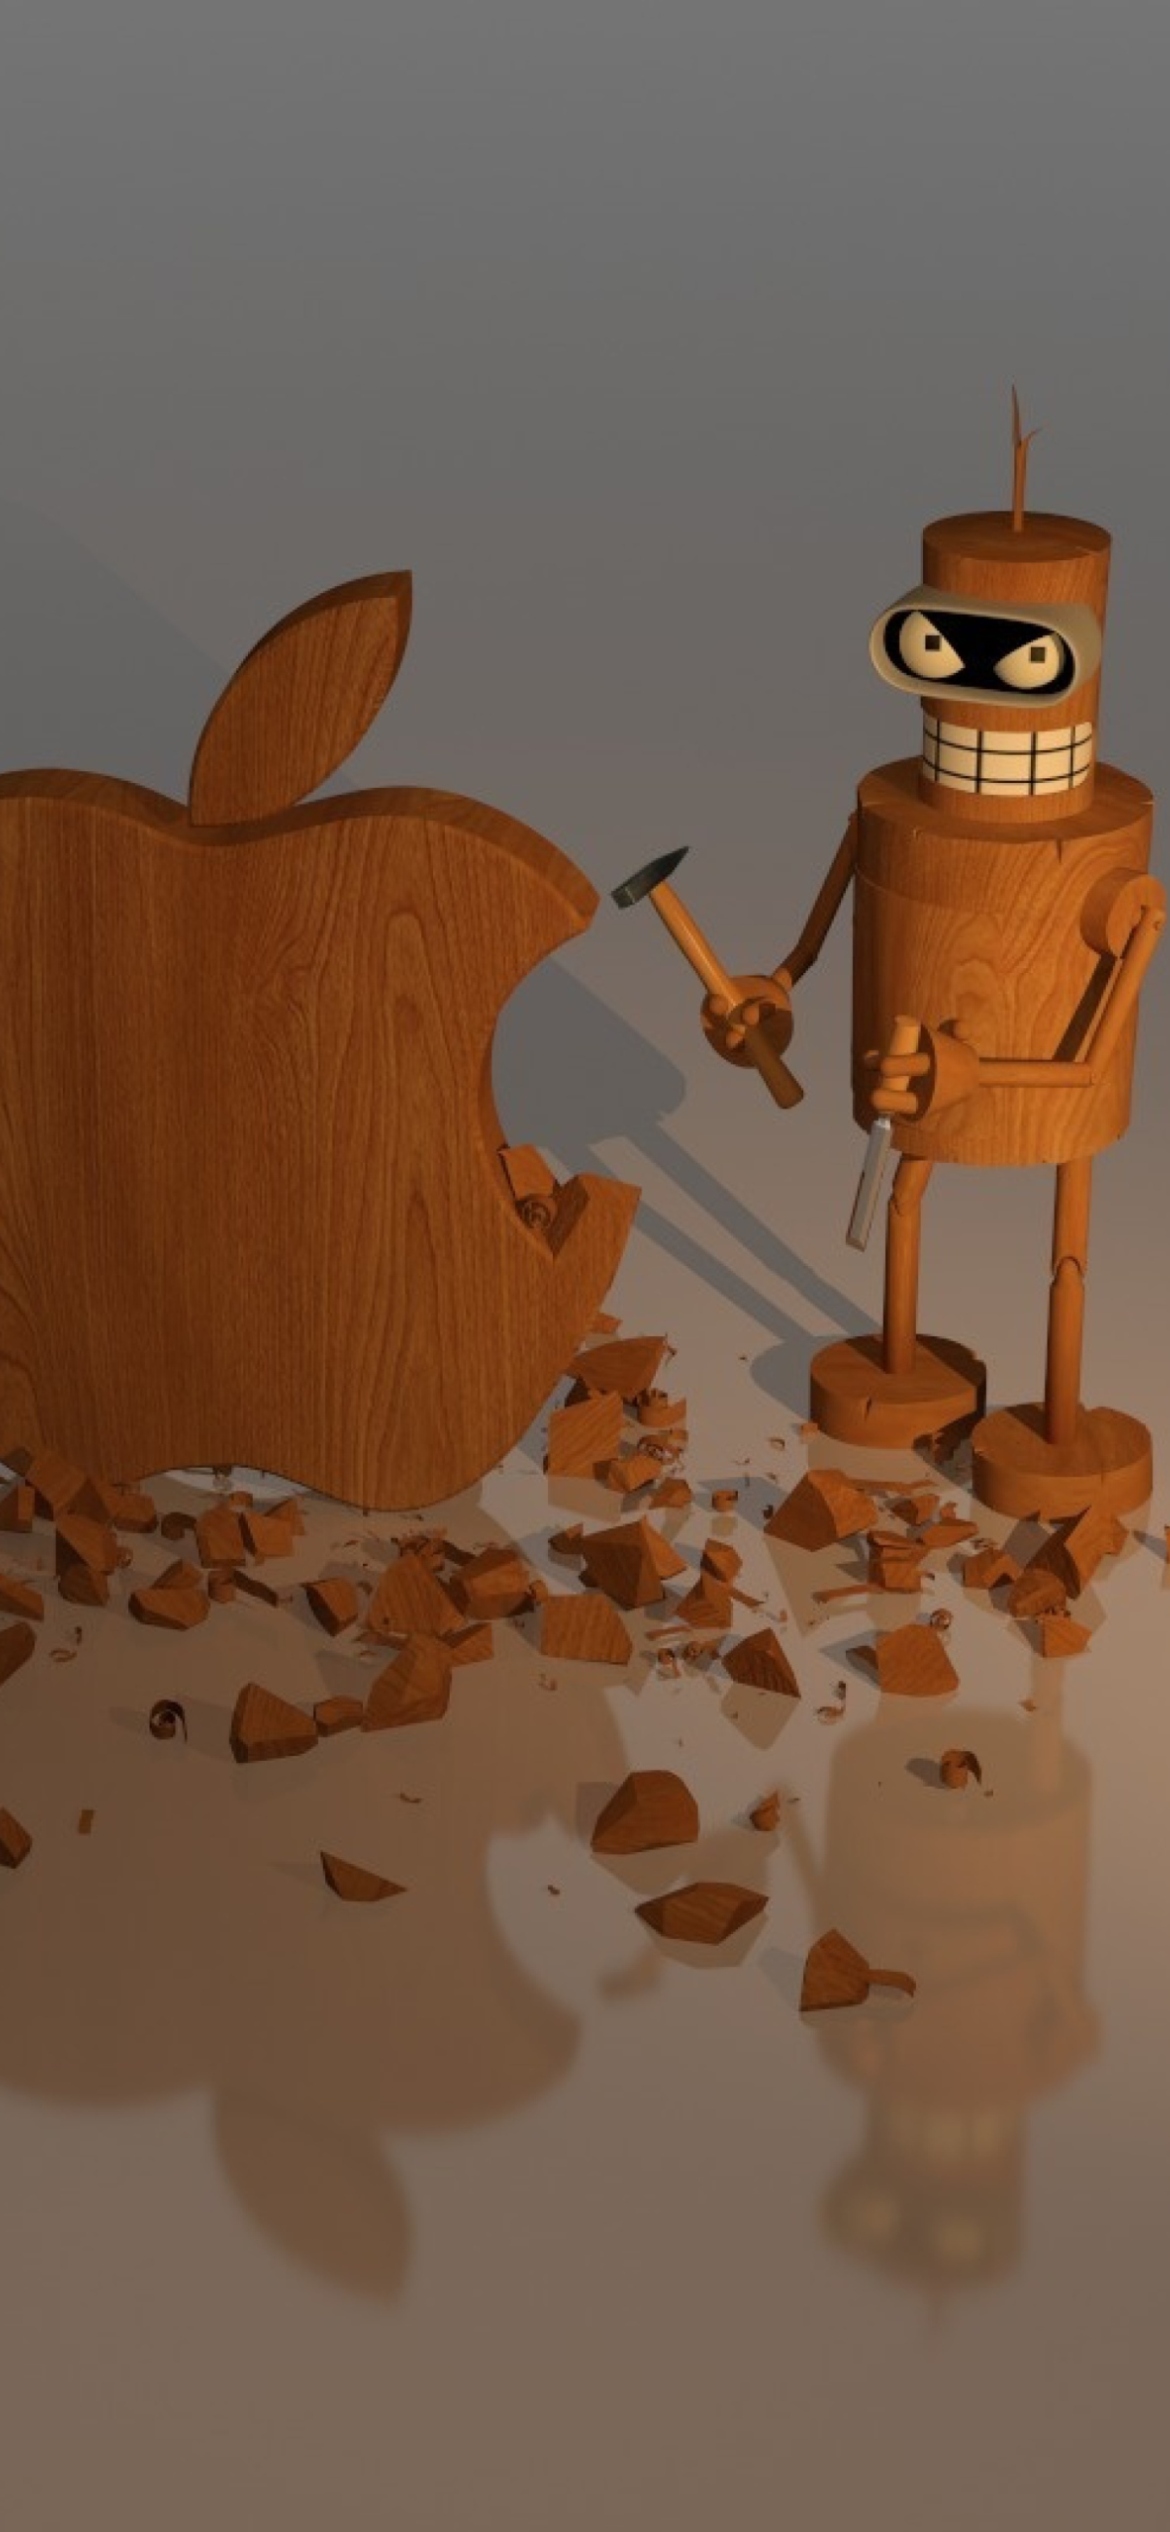 Das Bender Against Apple Wallpaper 1170x2532